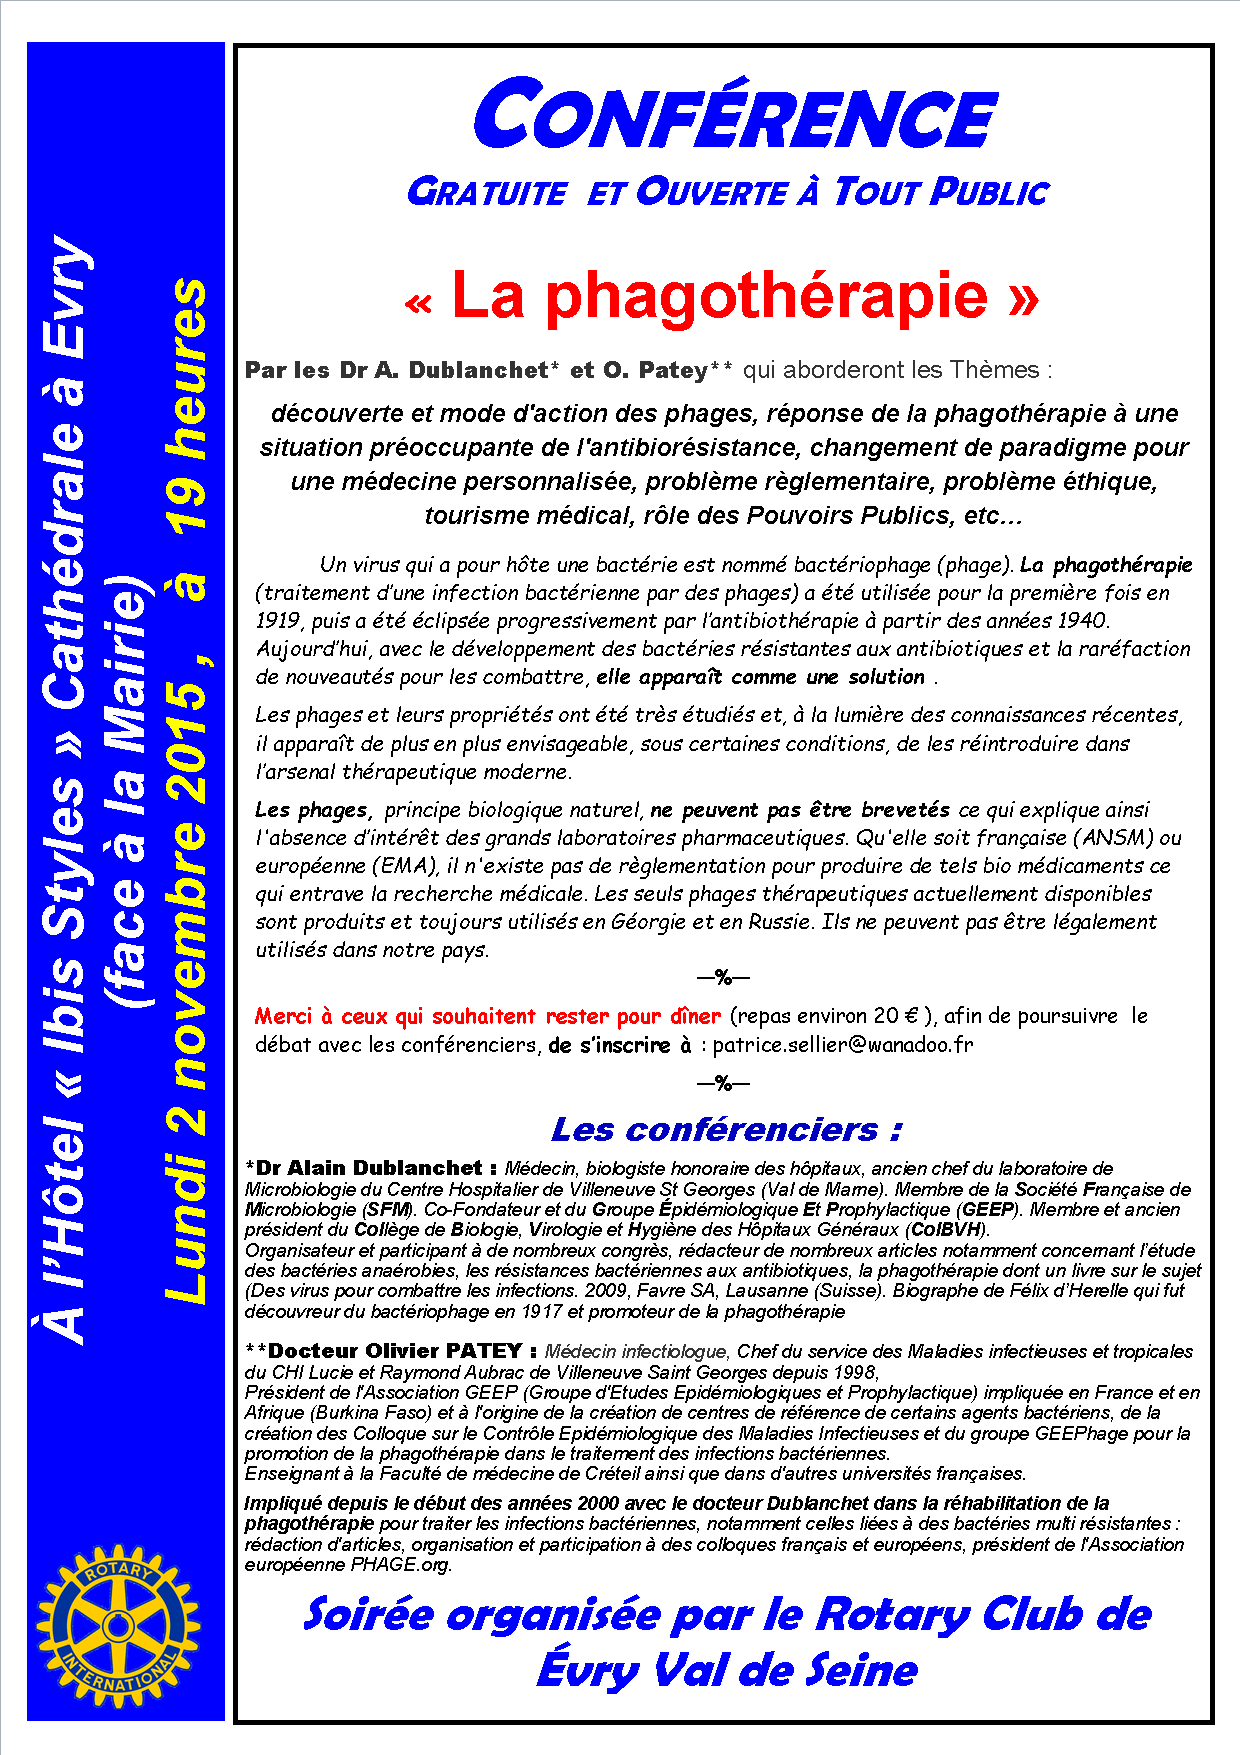 Conf-Phagotherapie 2015-11-02 EVDS